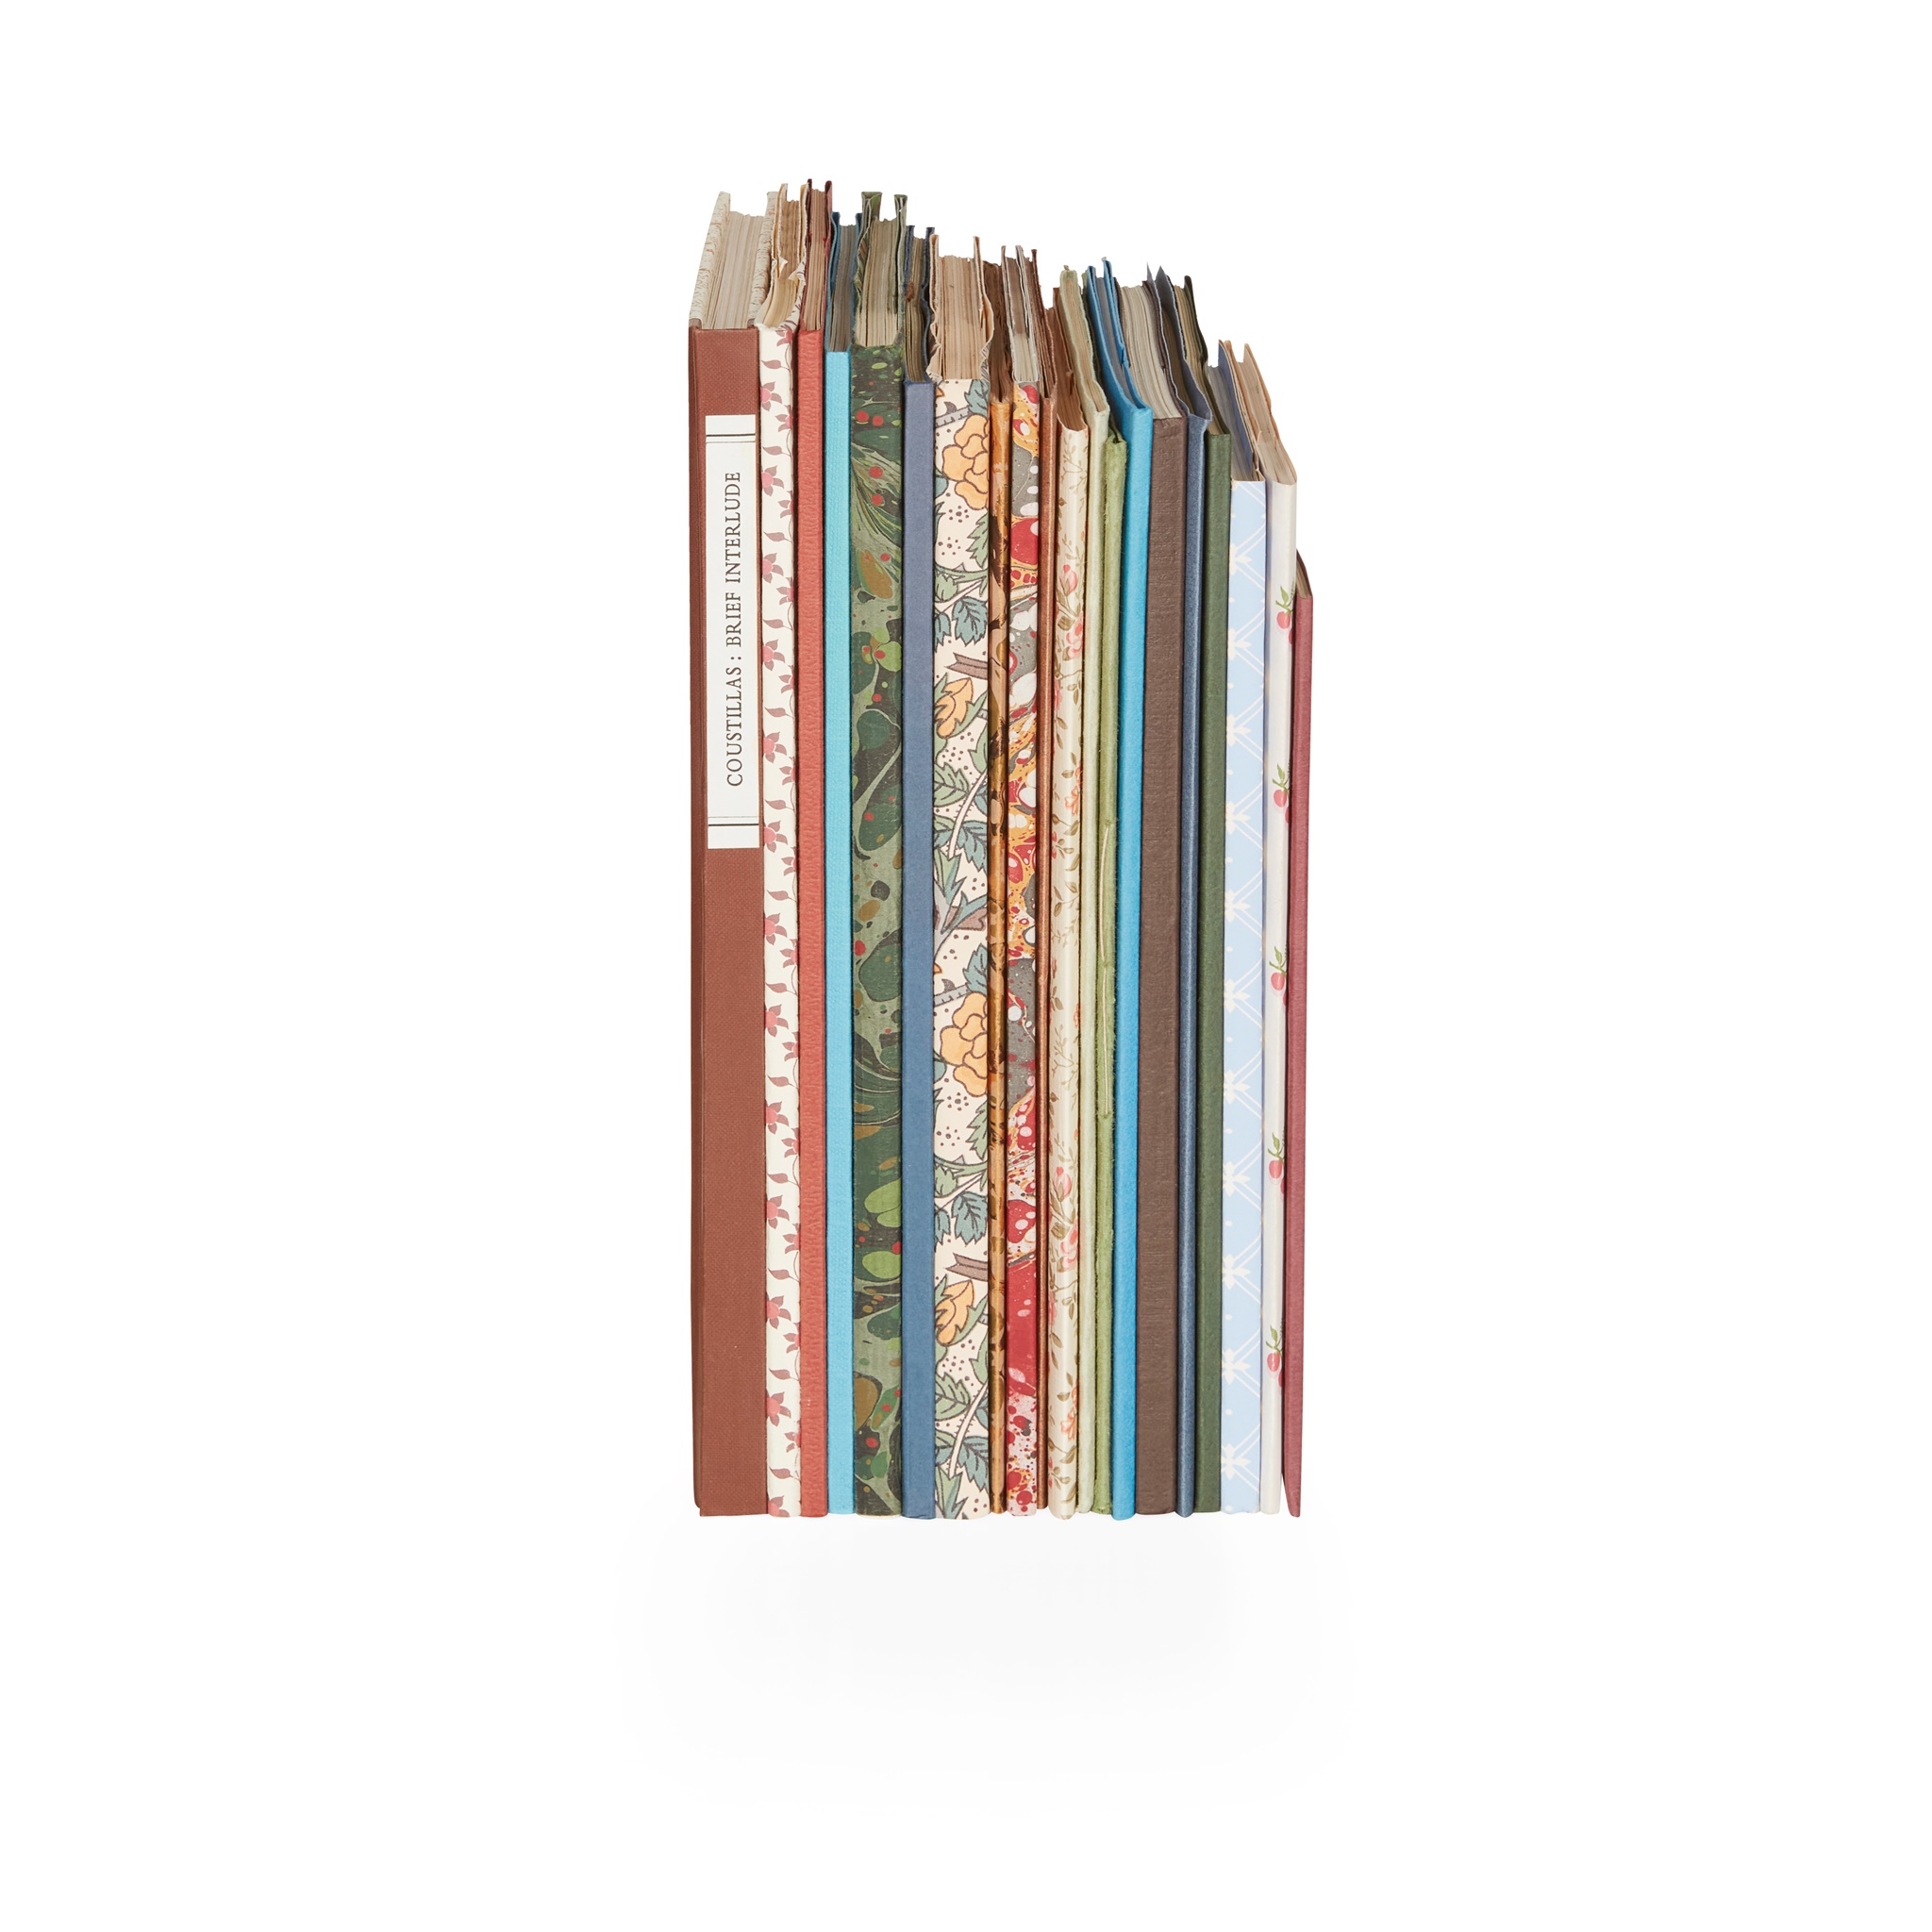 Tragara Press, 20 volumes comprising